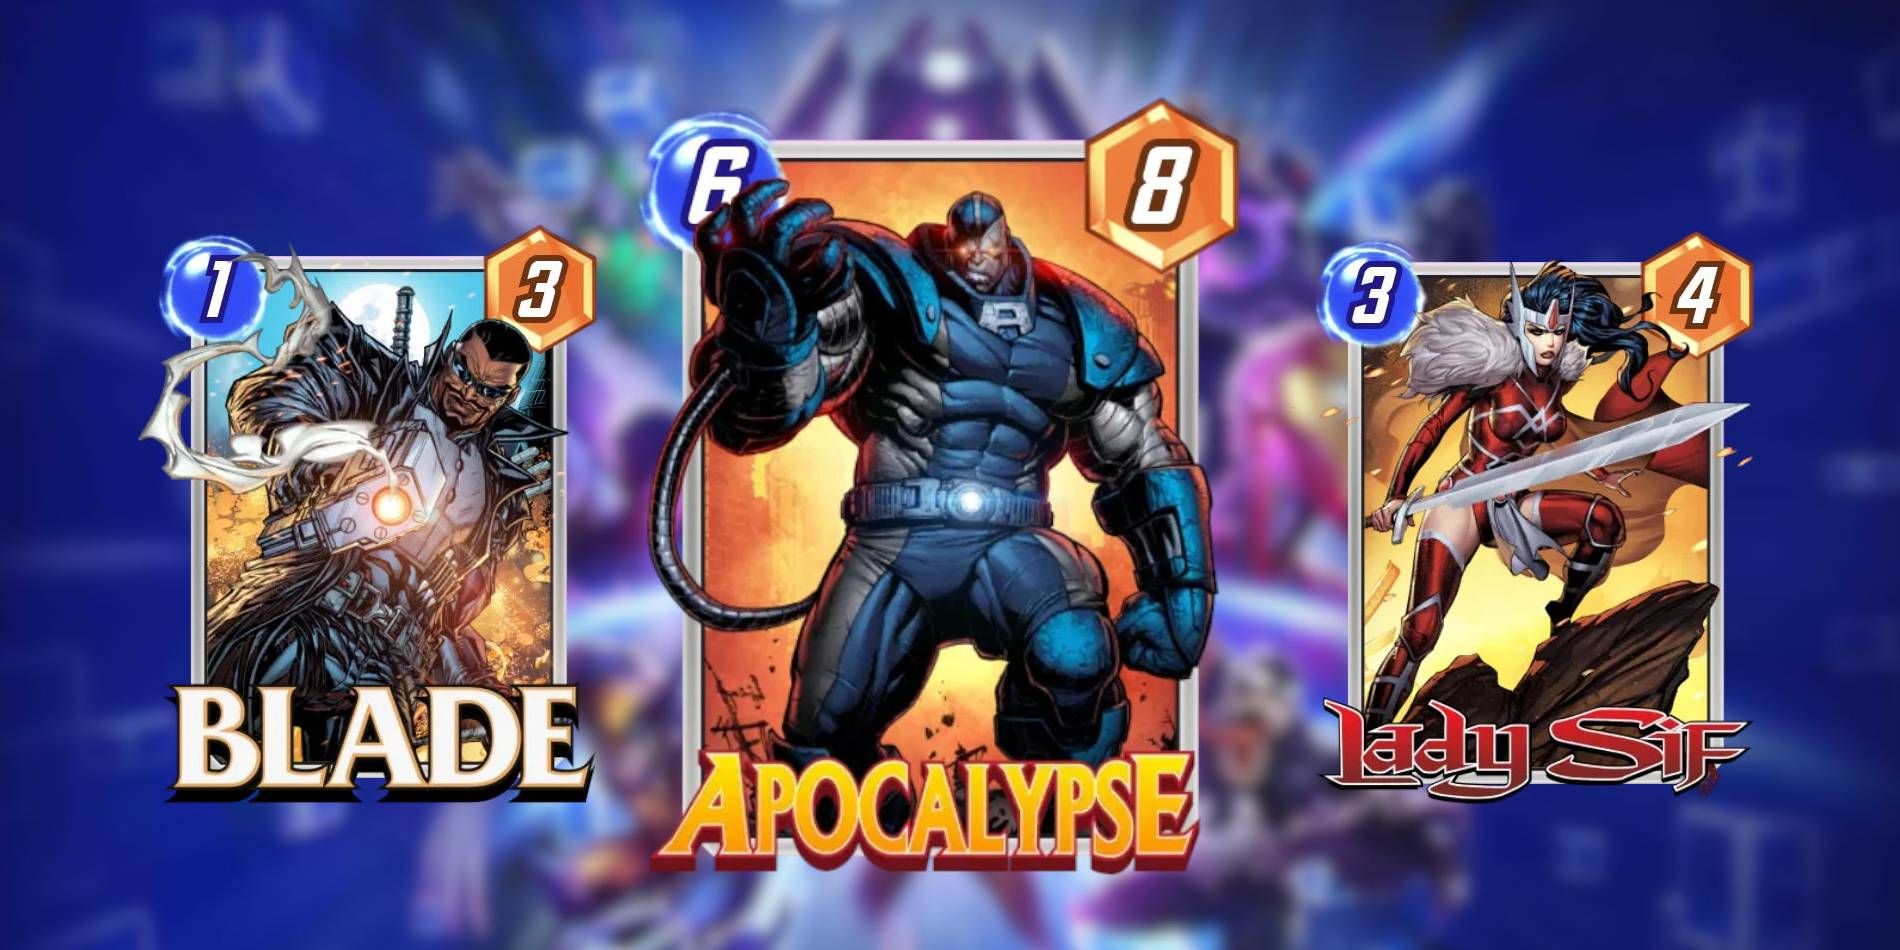 Apocalypse - Marvel Snap Cards